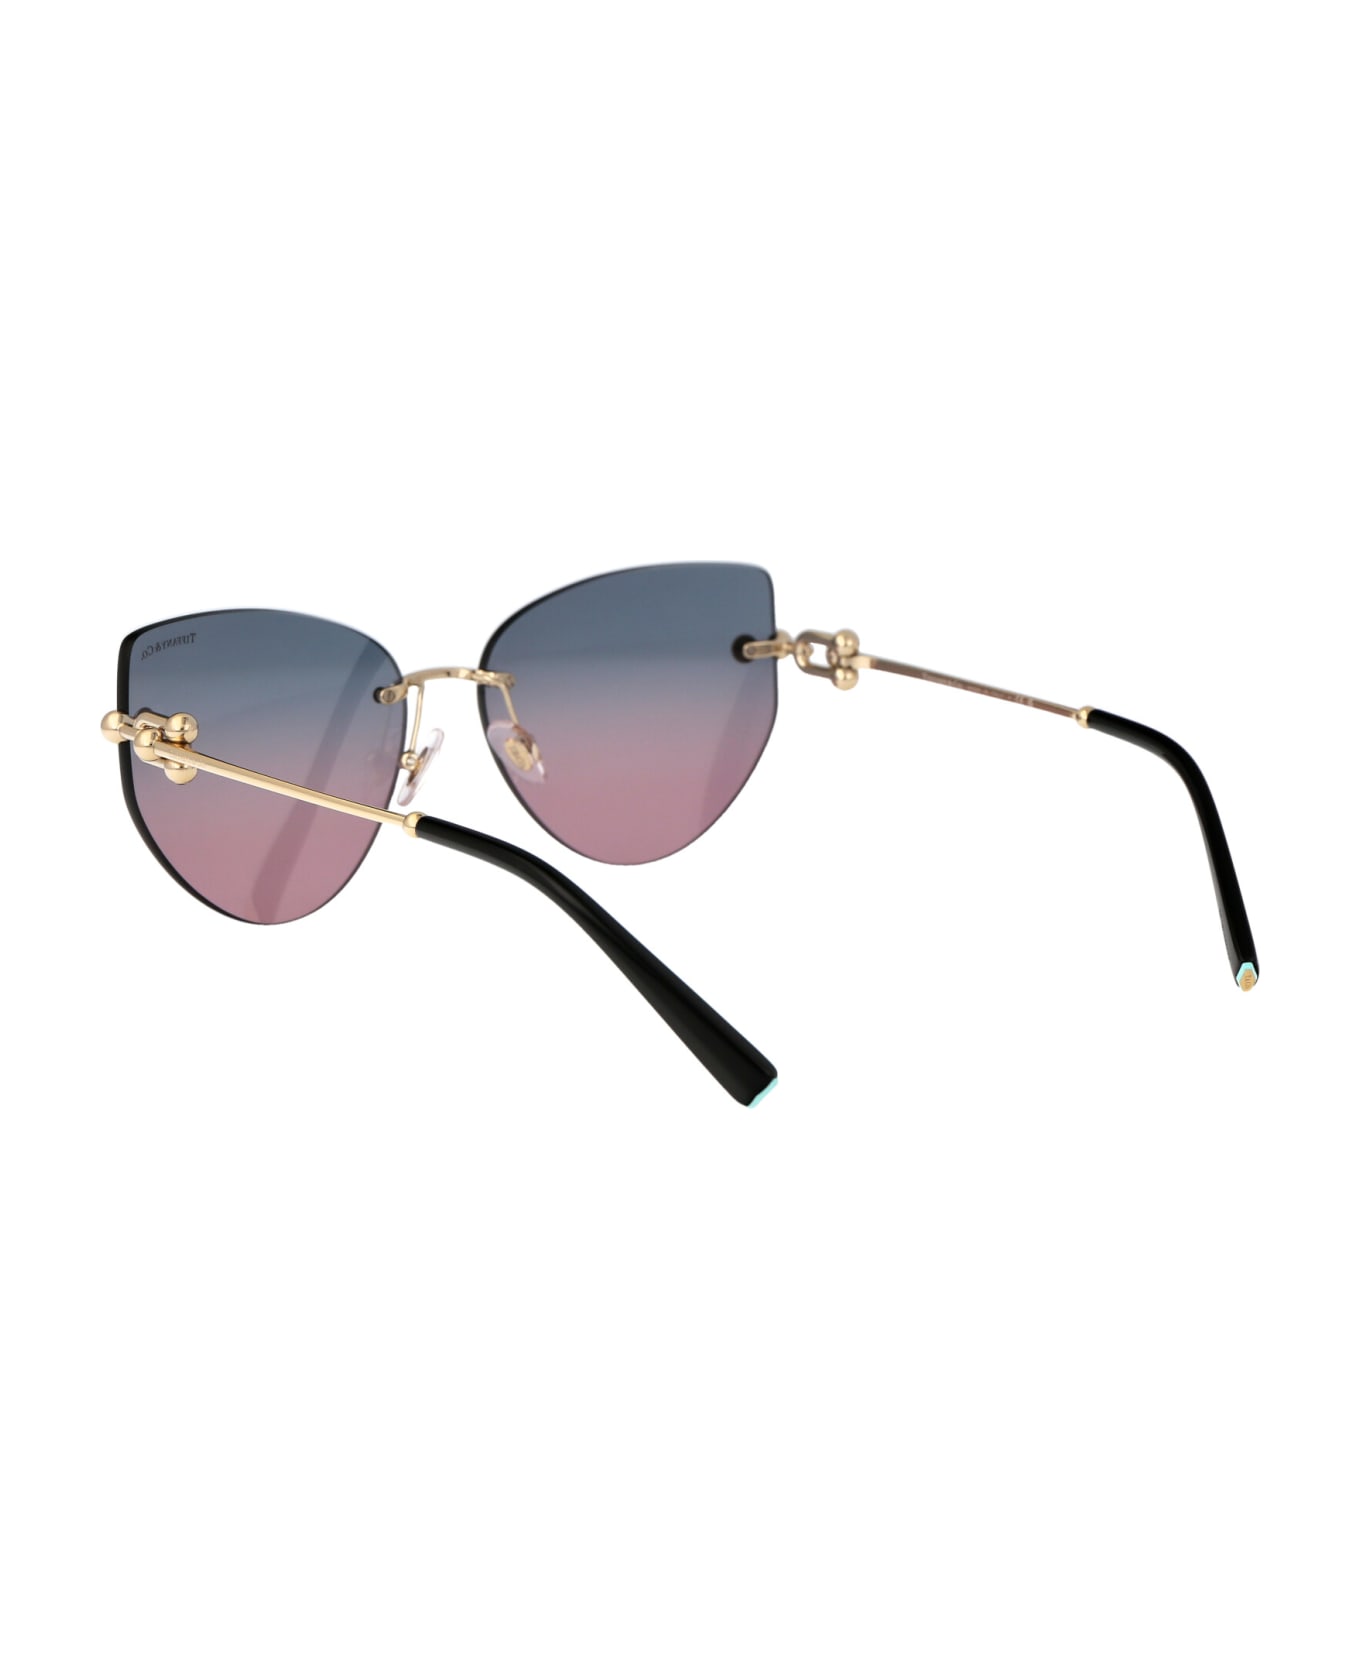 Tiffany & Co. 0tf3096 Sunglasses - 62030Q Pale Gold